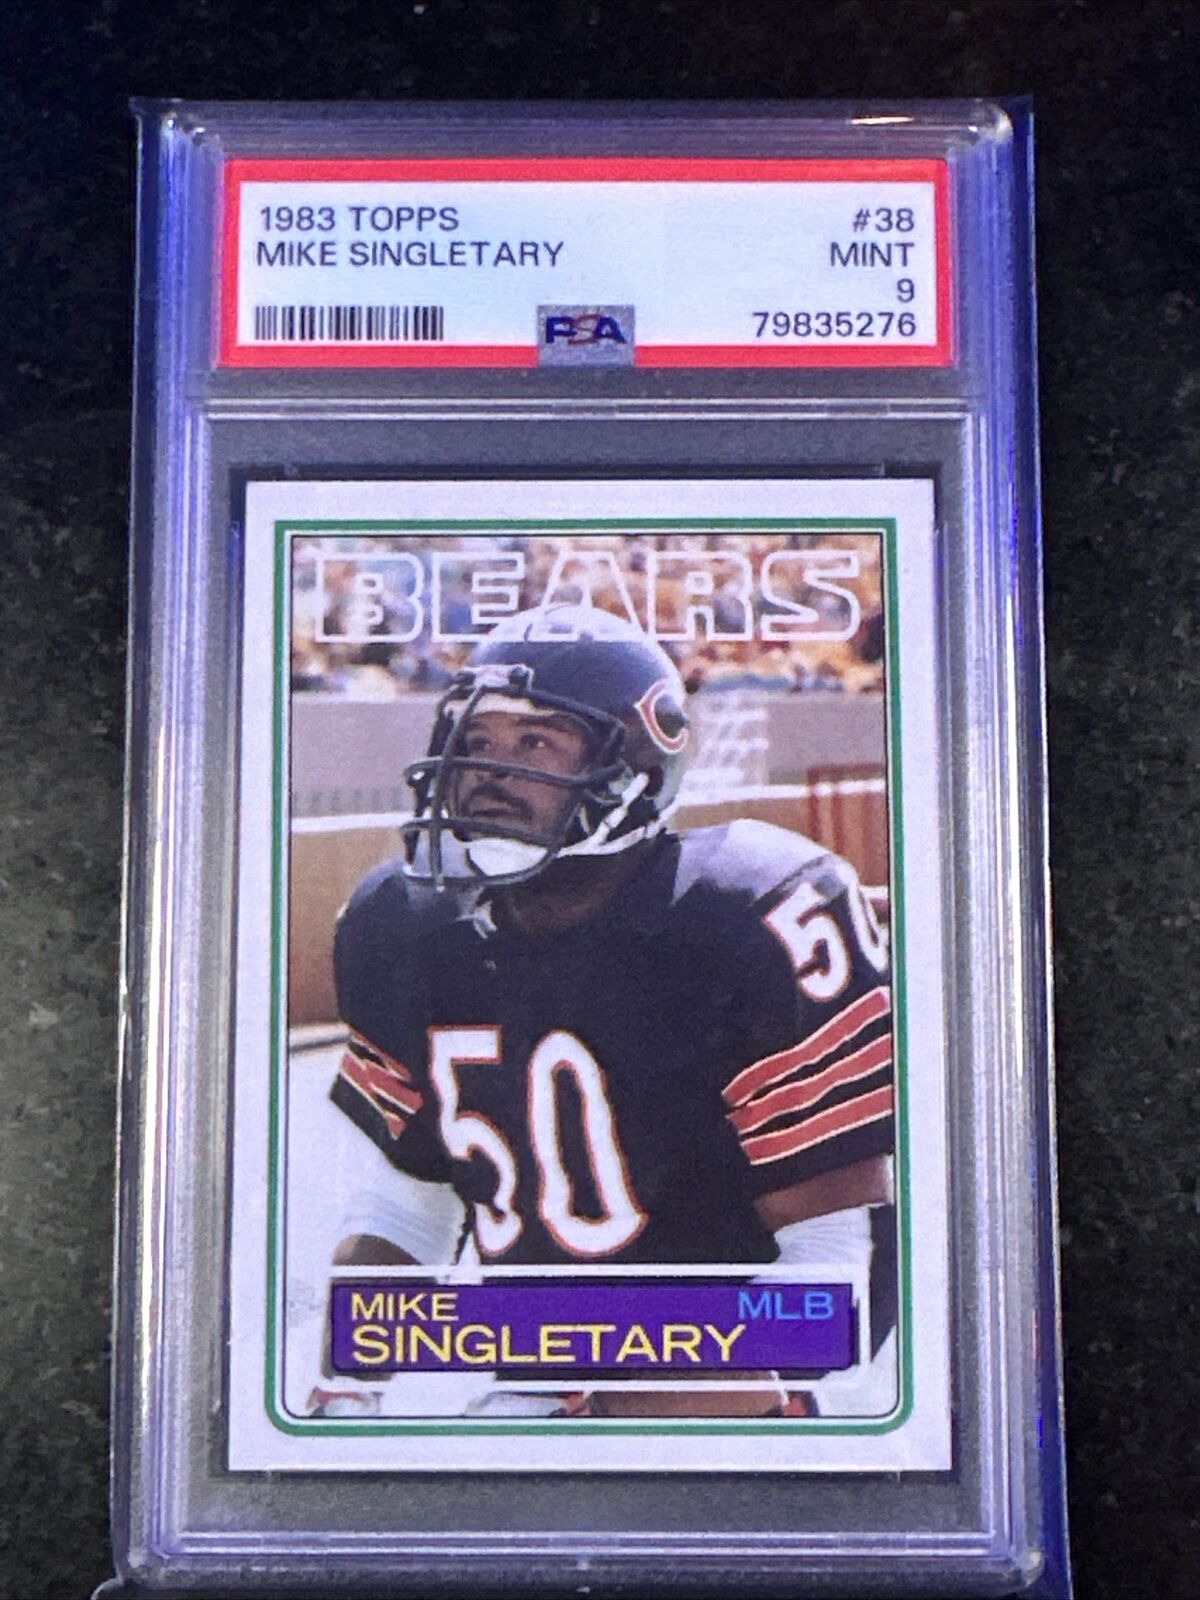 1983 Topps Mike Singletary #38 PSA 9 Mint Rookie Card RC Chicago Bears NFL HOF